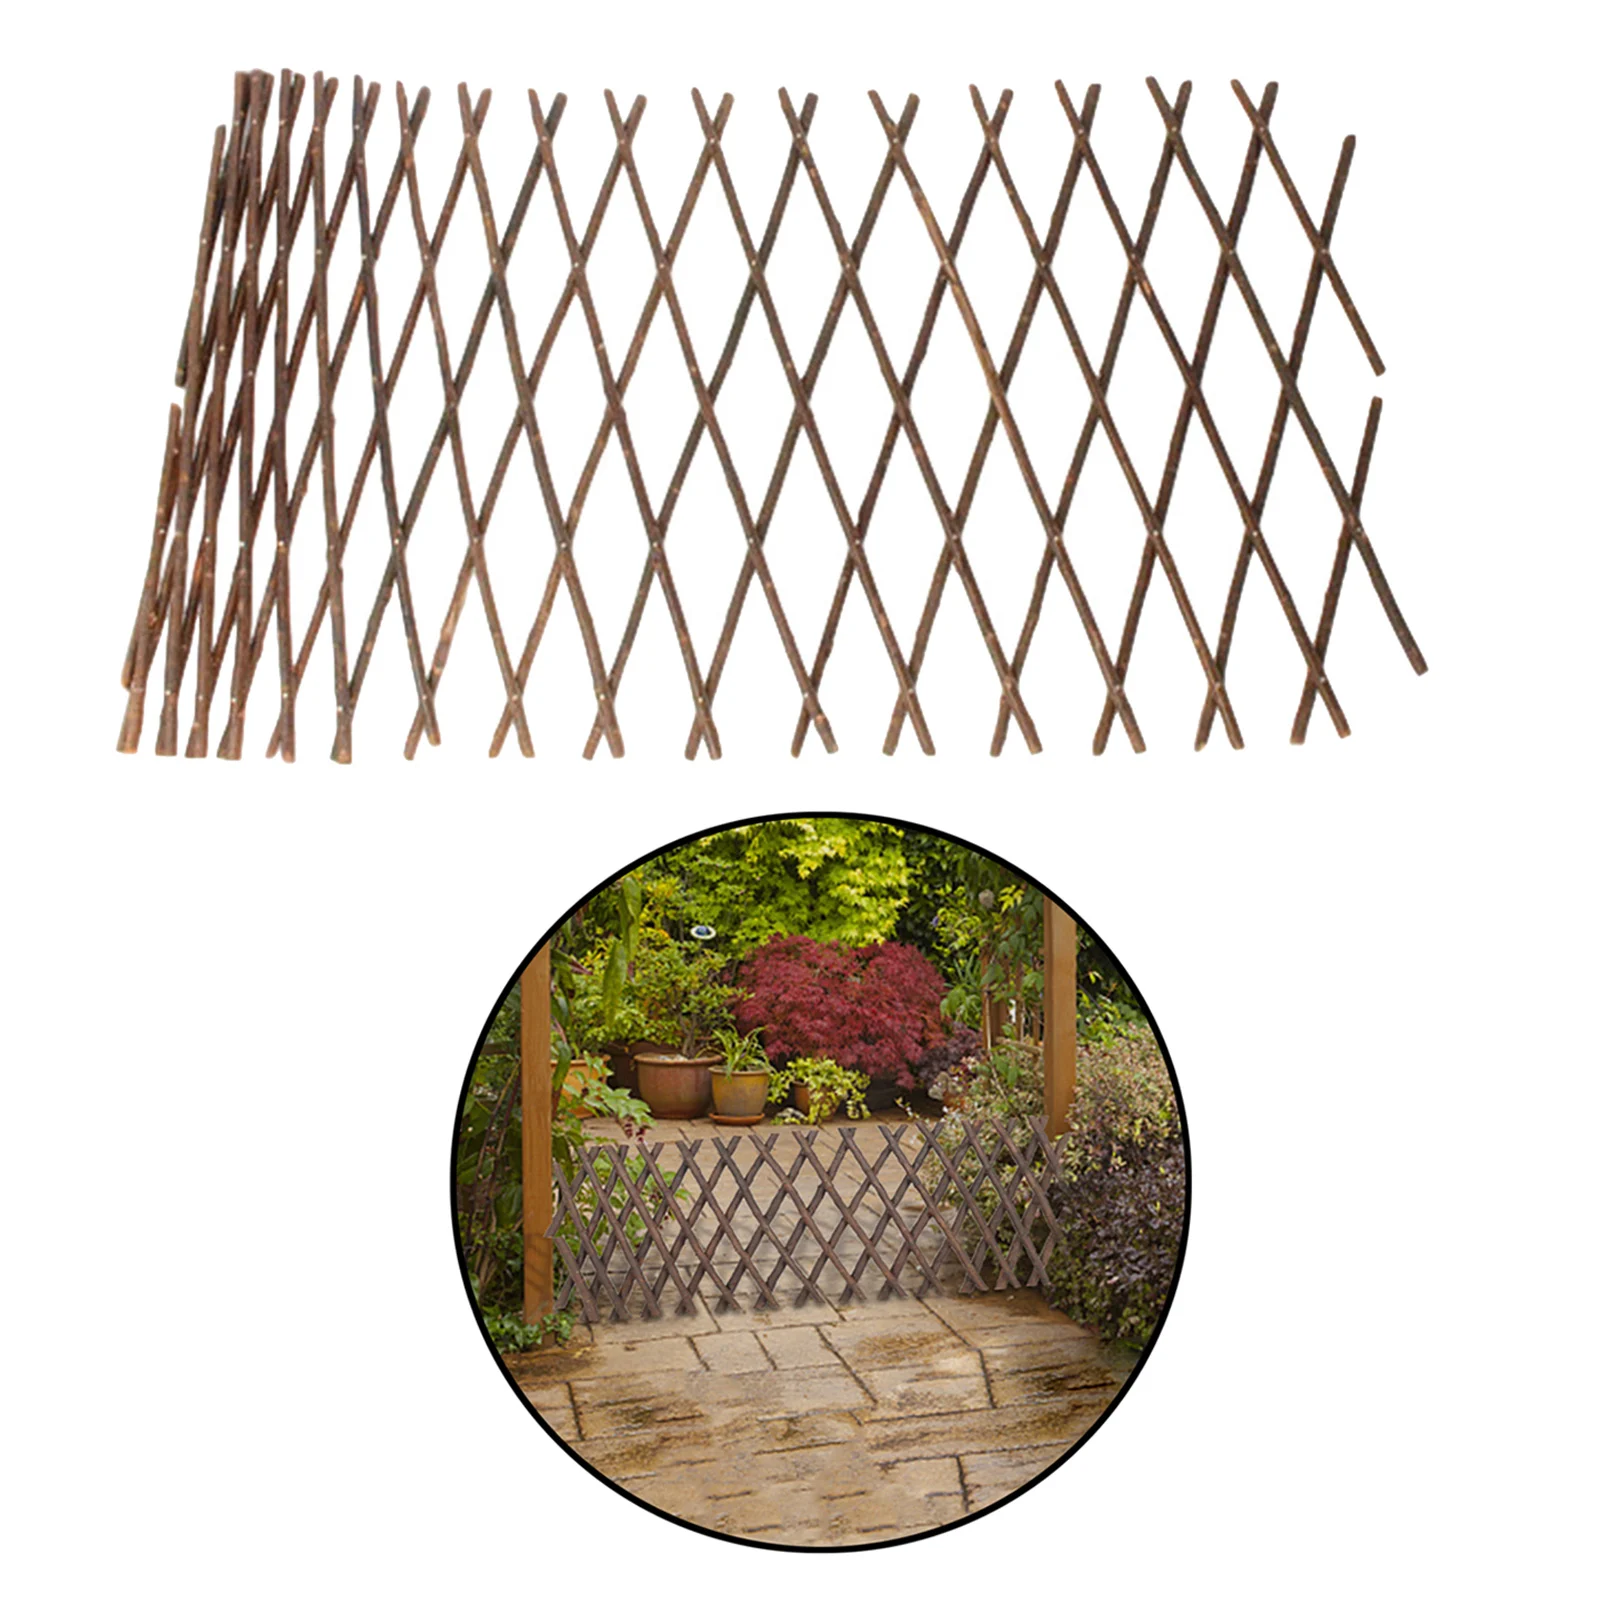 Outdoor Garden Expandable Trellis Bamboo Lattice Fence for Climbing Plants, Vine, Ivy, Size Ajdustable